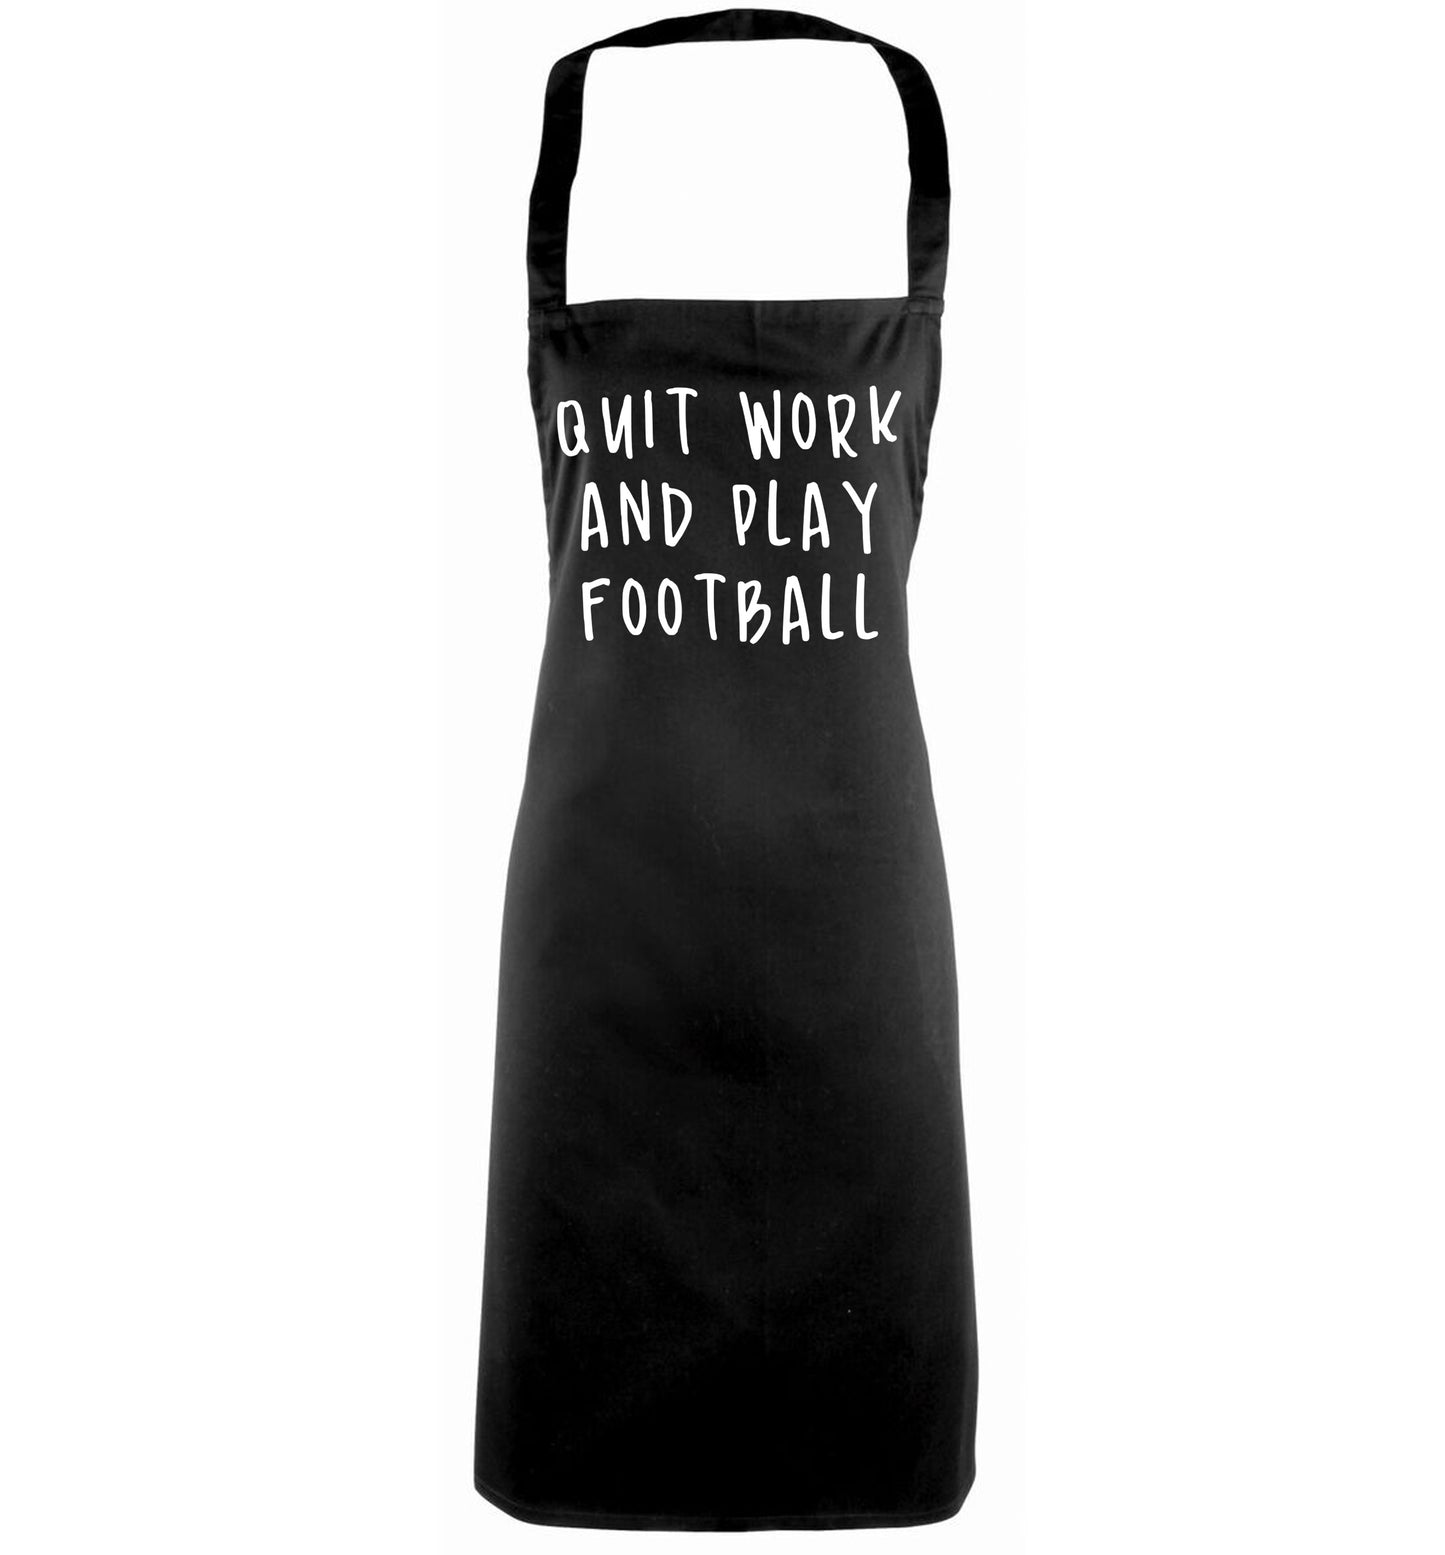 Quit work play football black apron